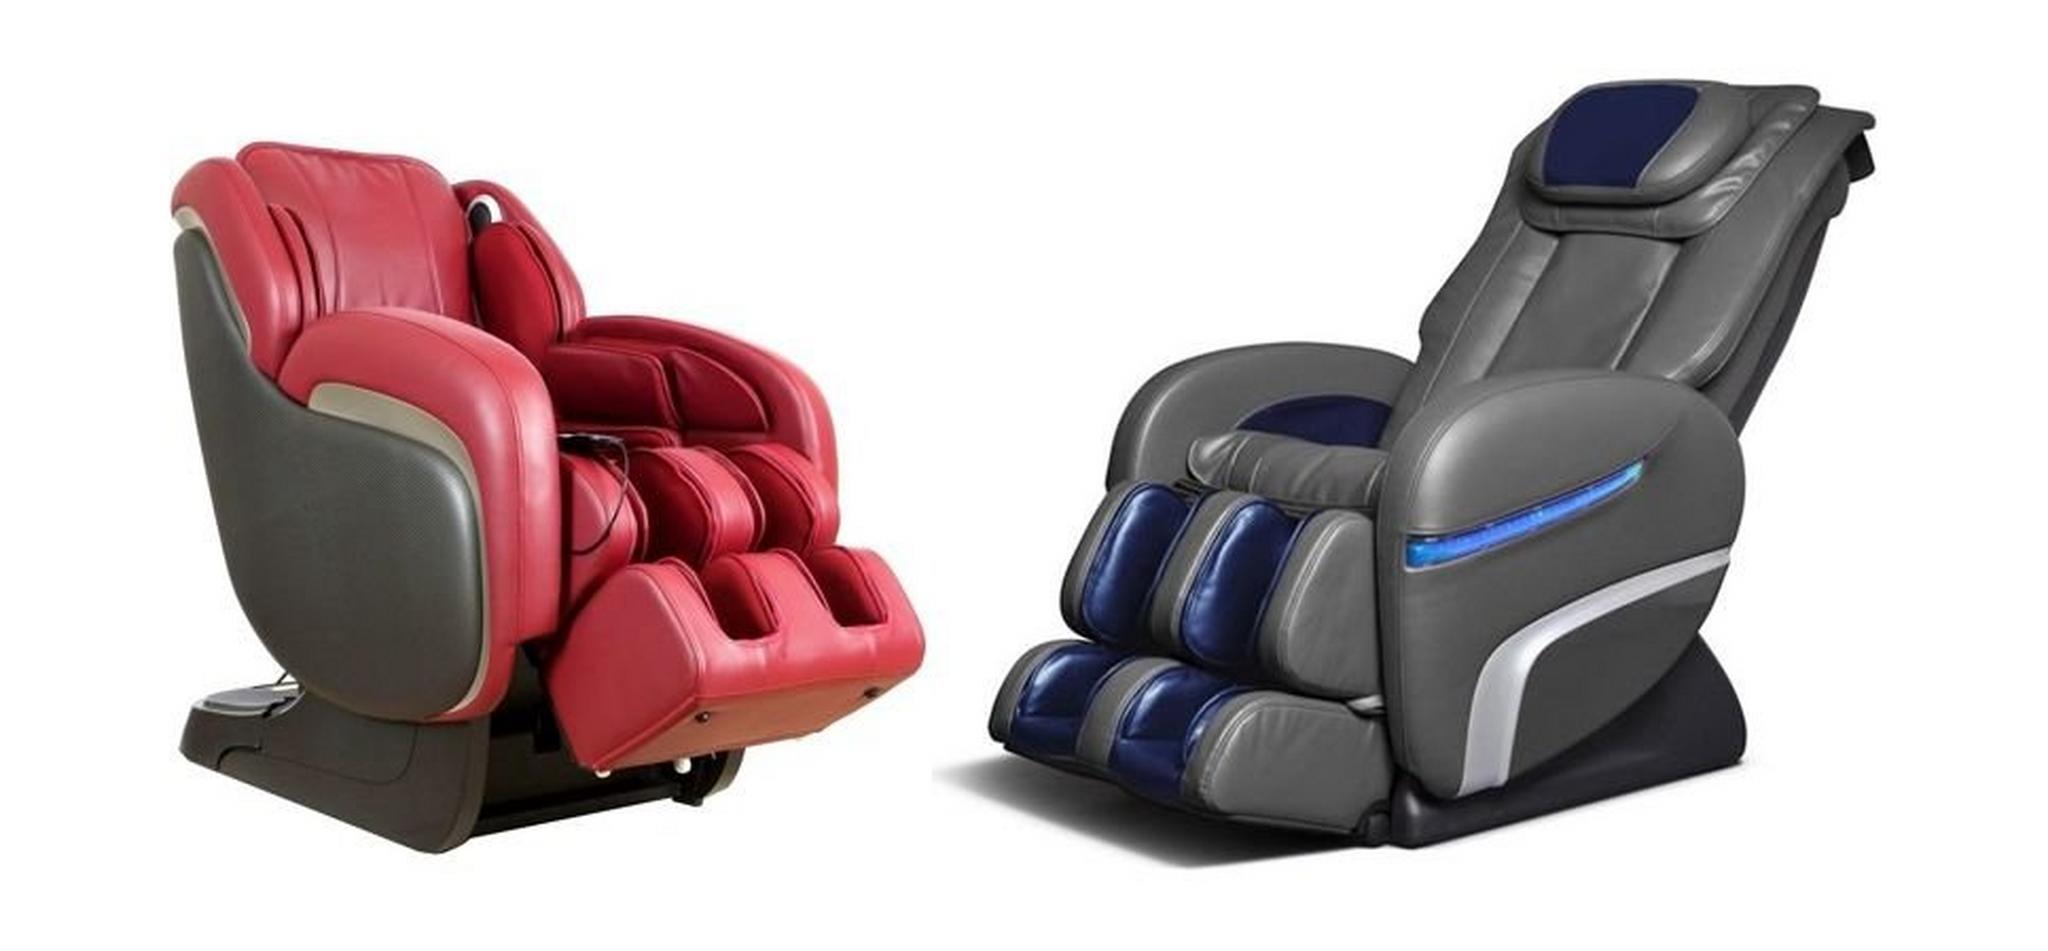 OTO Elite ET-01 Massage Chair with Heating & Speakers + OTO Cyber Indulge Massage Chair